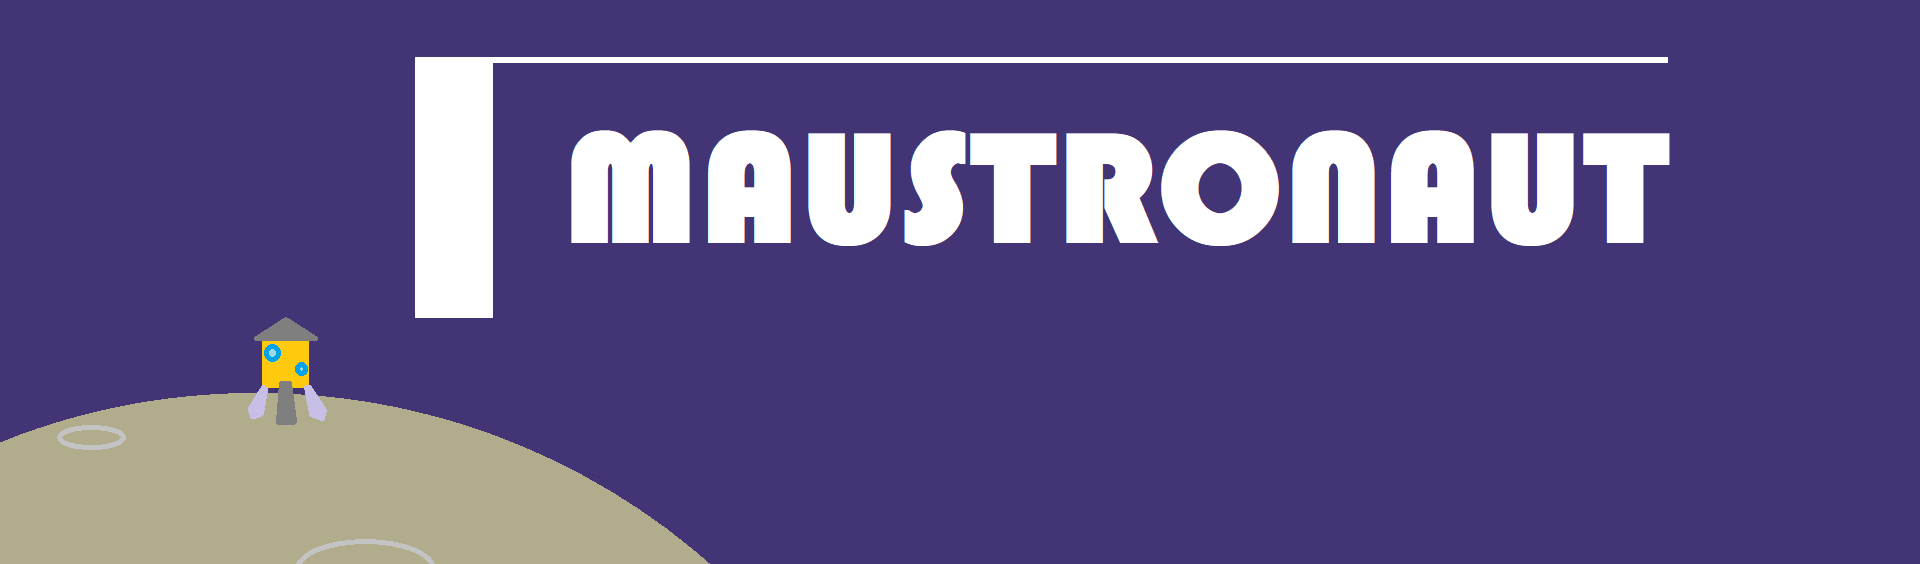 Maustronaut (S2020 Team 23)